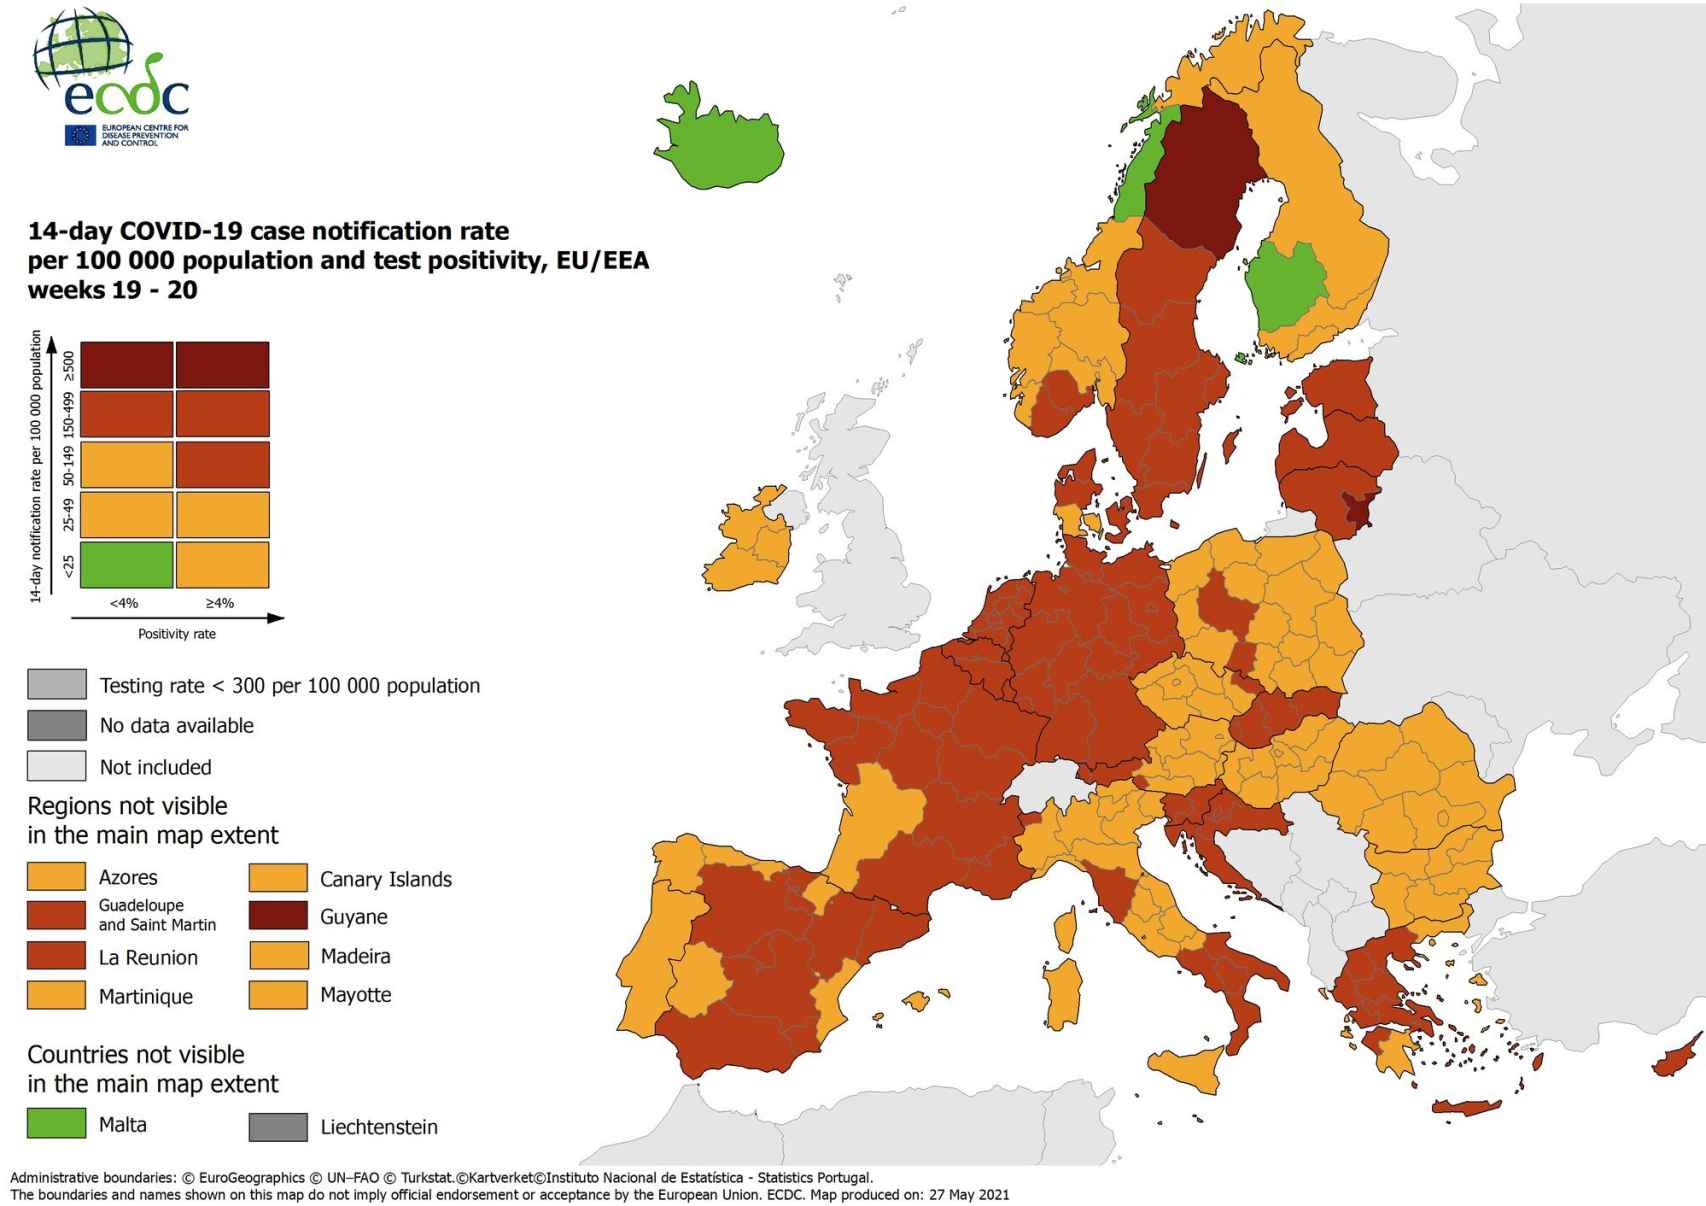 Mapa semafórico de zonas de riesgo en la UE